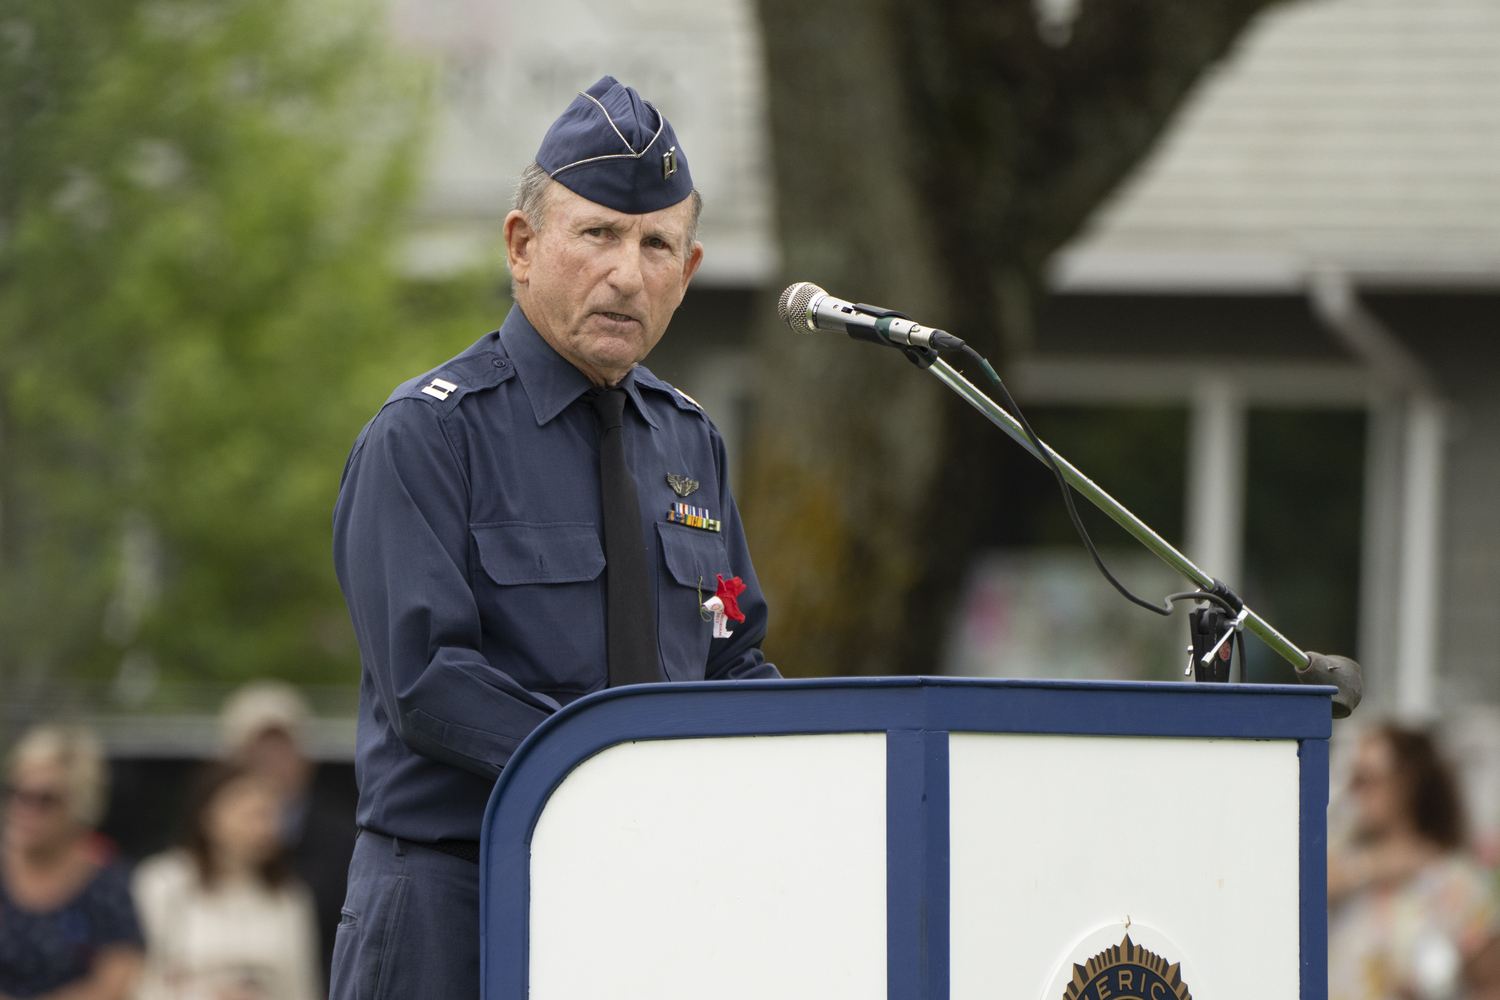 Unites States Air Force veteran Paul Babcock gives the keynote address at Sag Harbor's Memorial Day observance. LORI HAWKINS